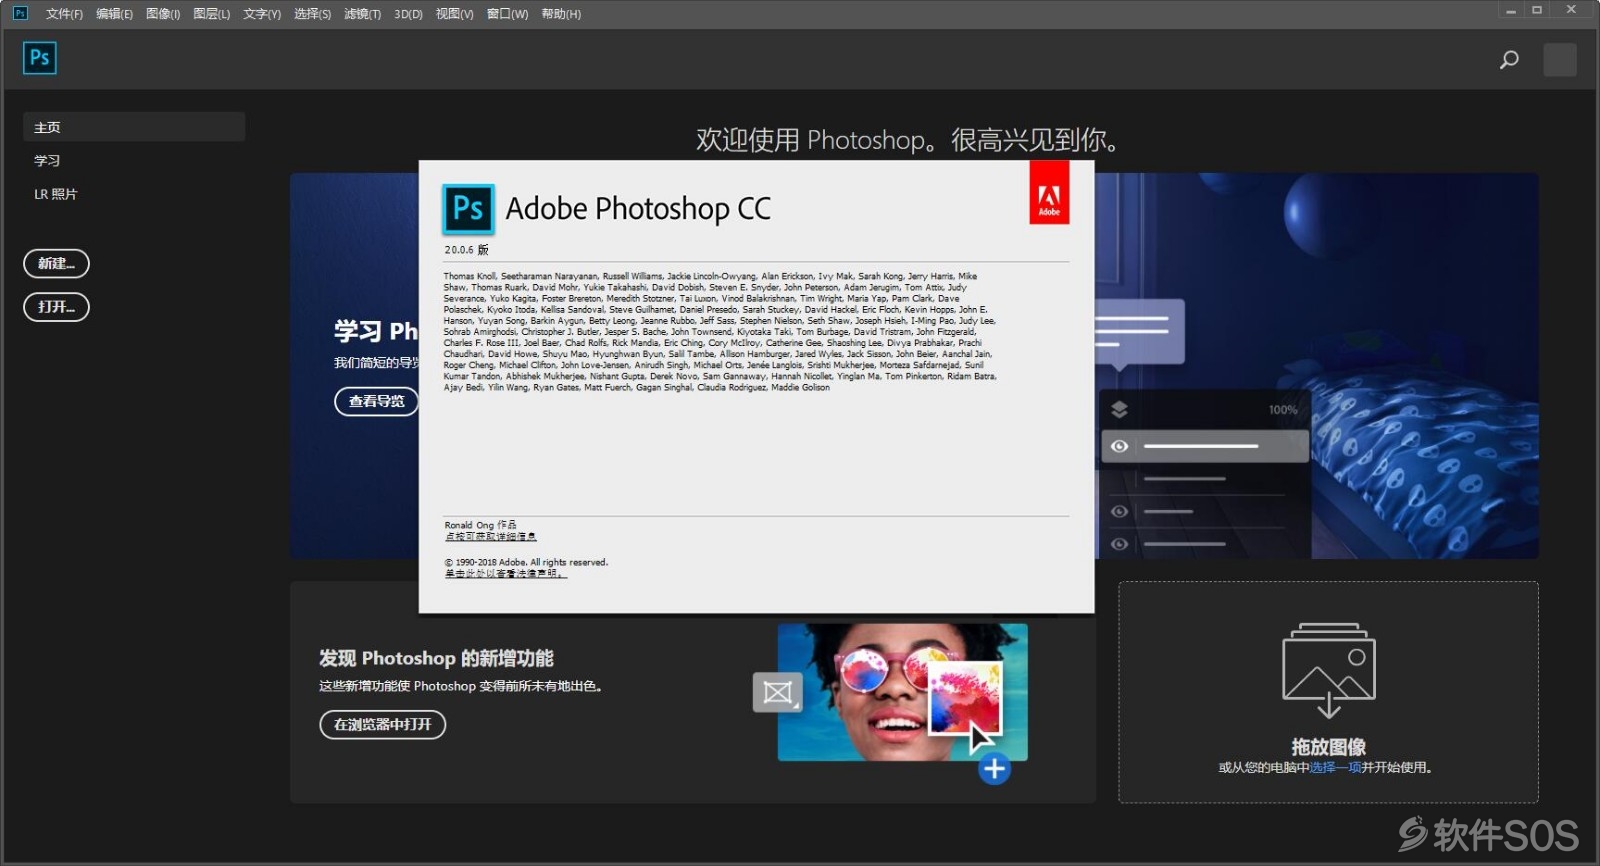 Photoshop CC 2019 v20.0.6.80 直装版 安装教程详解